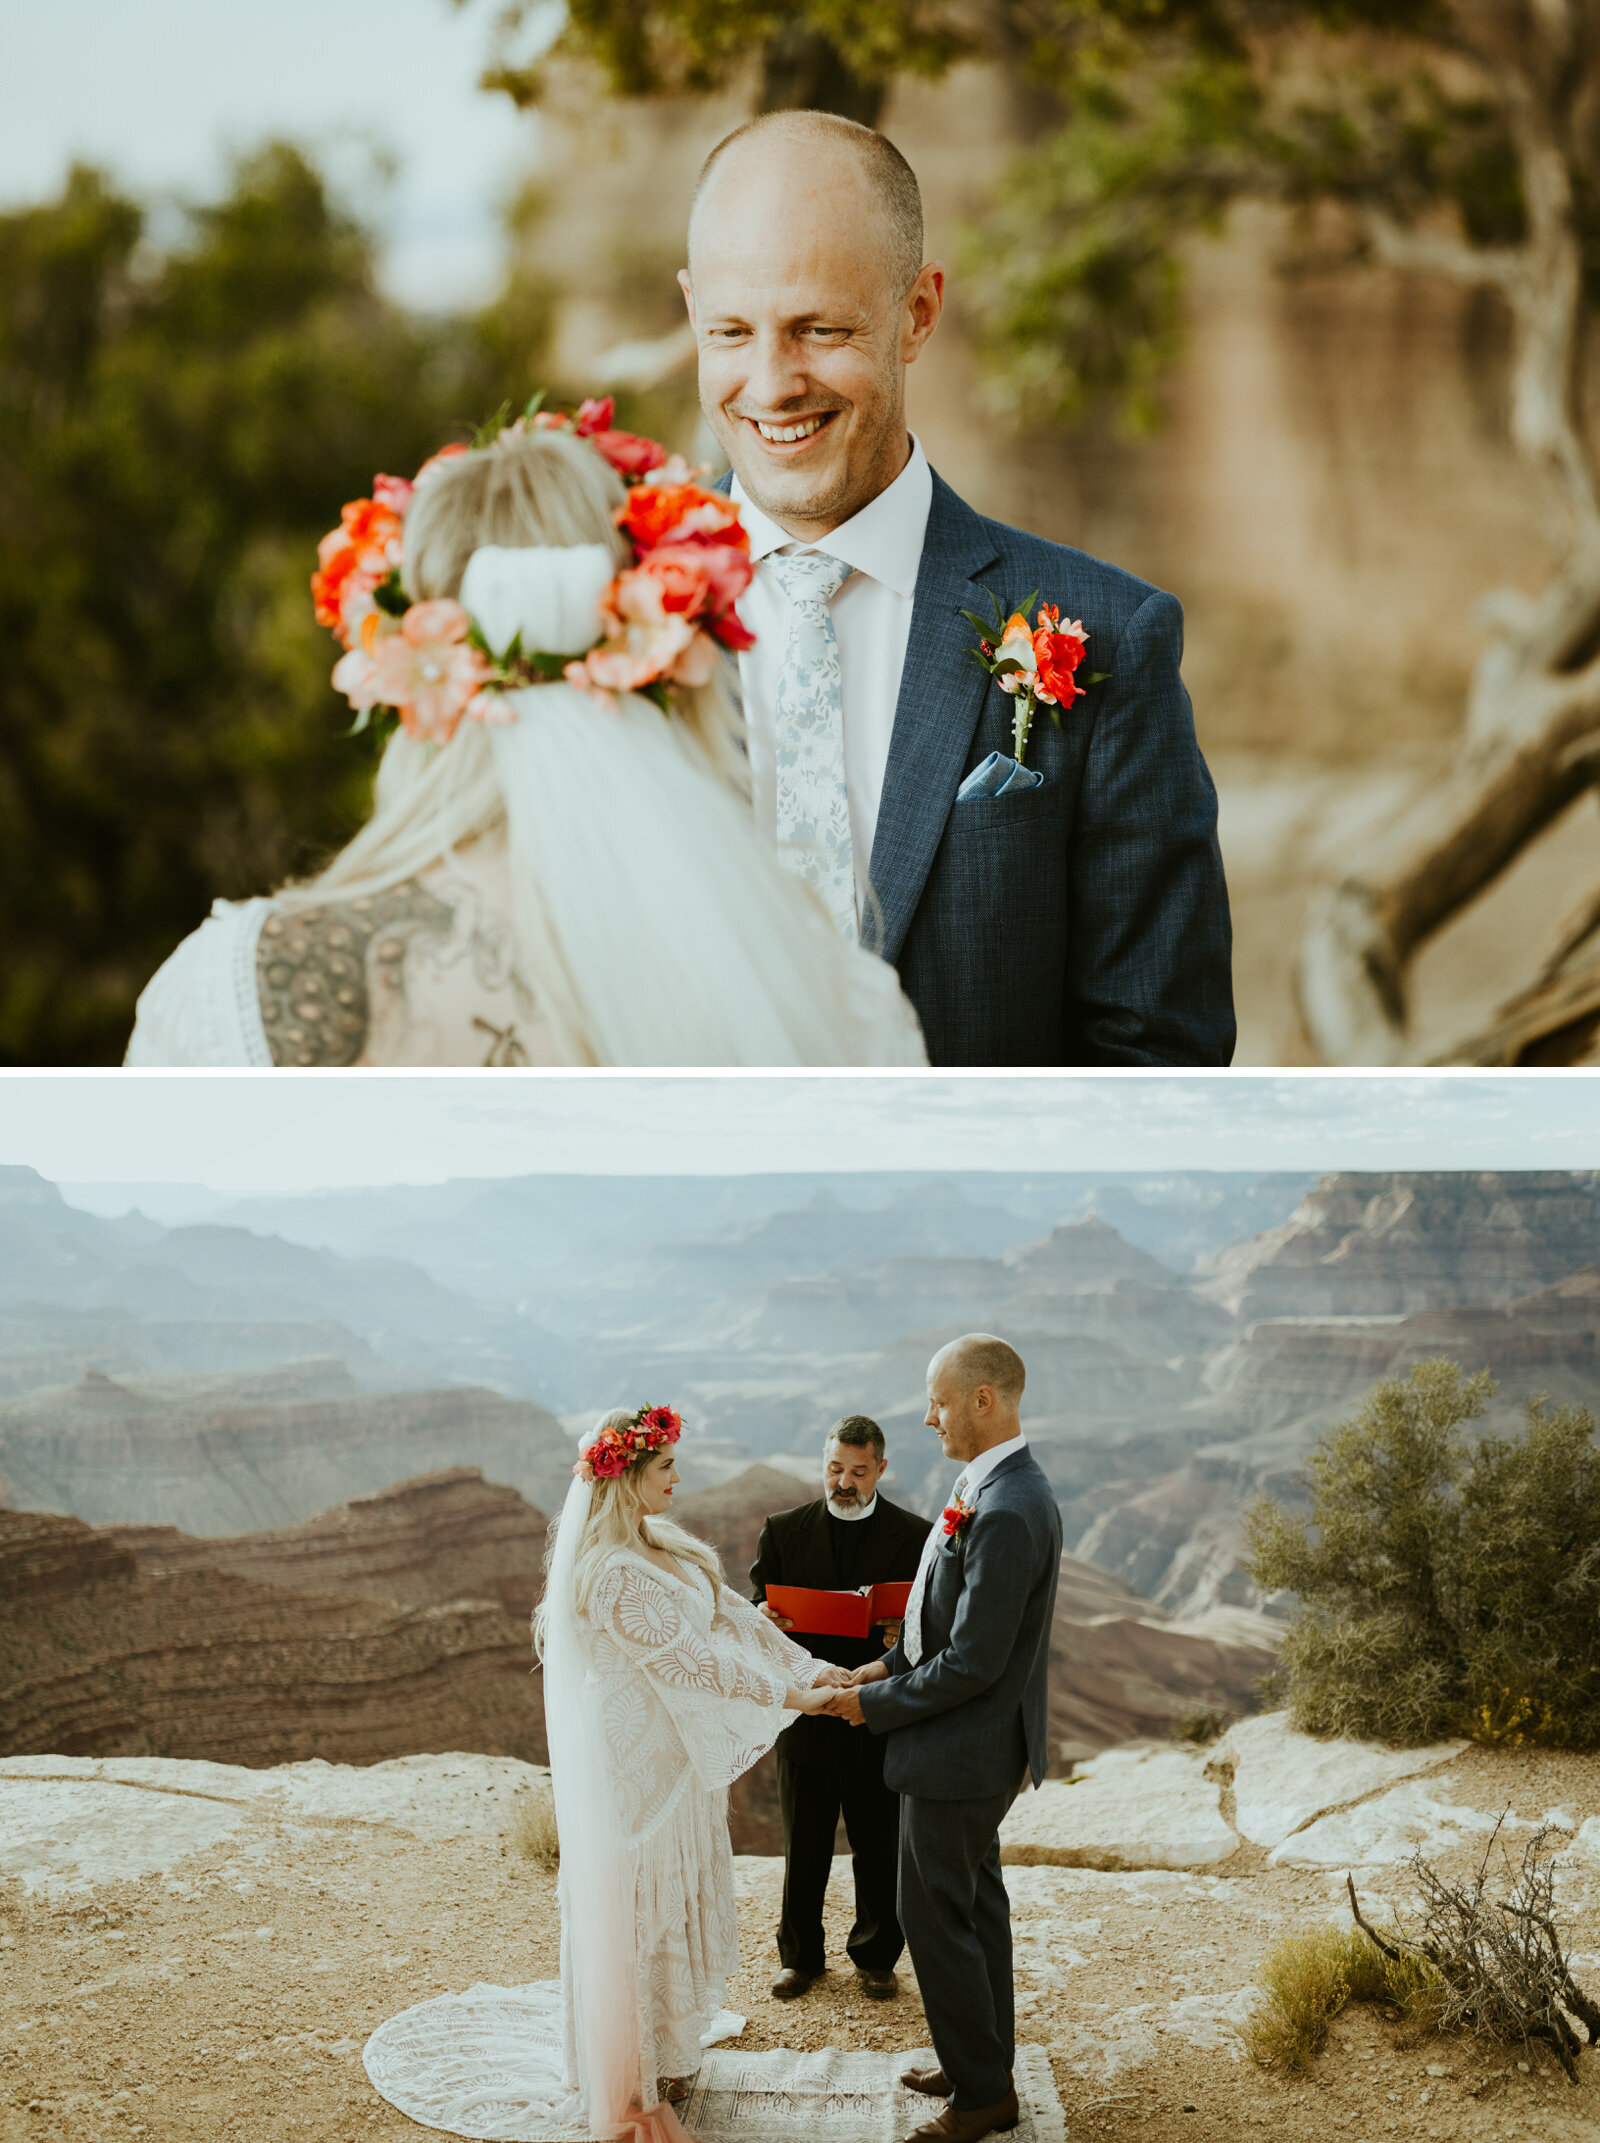 Grand Canyon National Park Elopement Moran Point Arizona boho wedding Photography boho style inspo bohemian bride inspiration blue suit groom style inspo floral neck tie.jpg